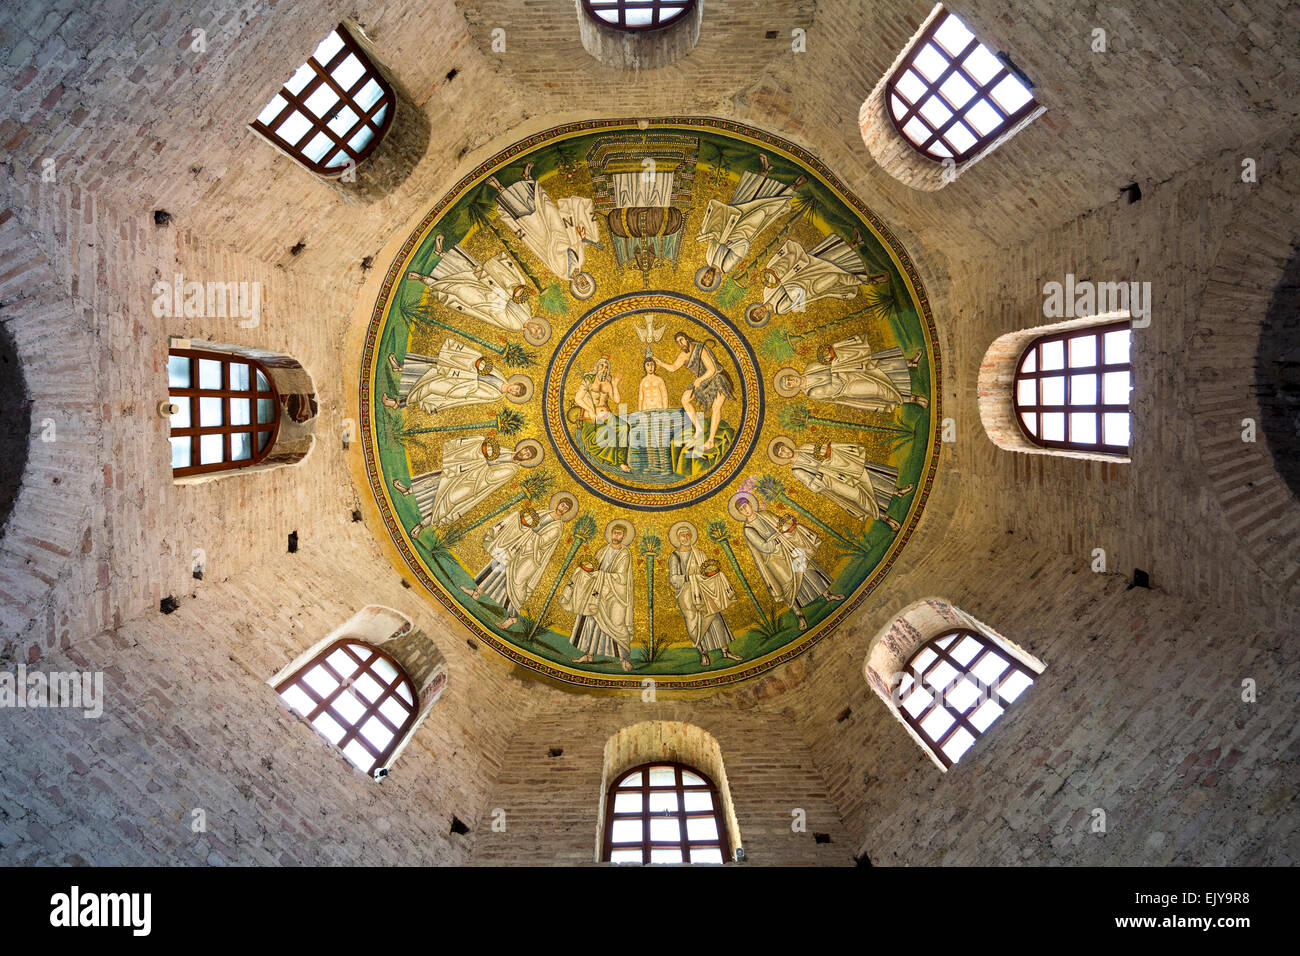 dome mosaic of the baptism of Jesus by Saint John the Baptist, Arian Baptistry, Ravenna, Italy Stock Photo